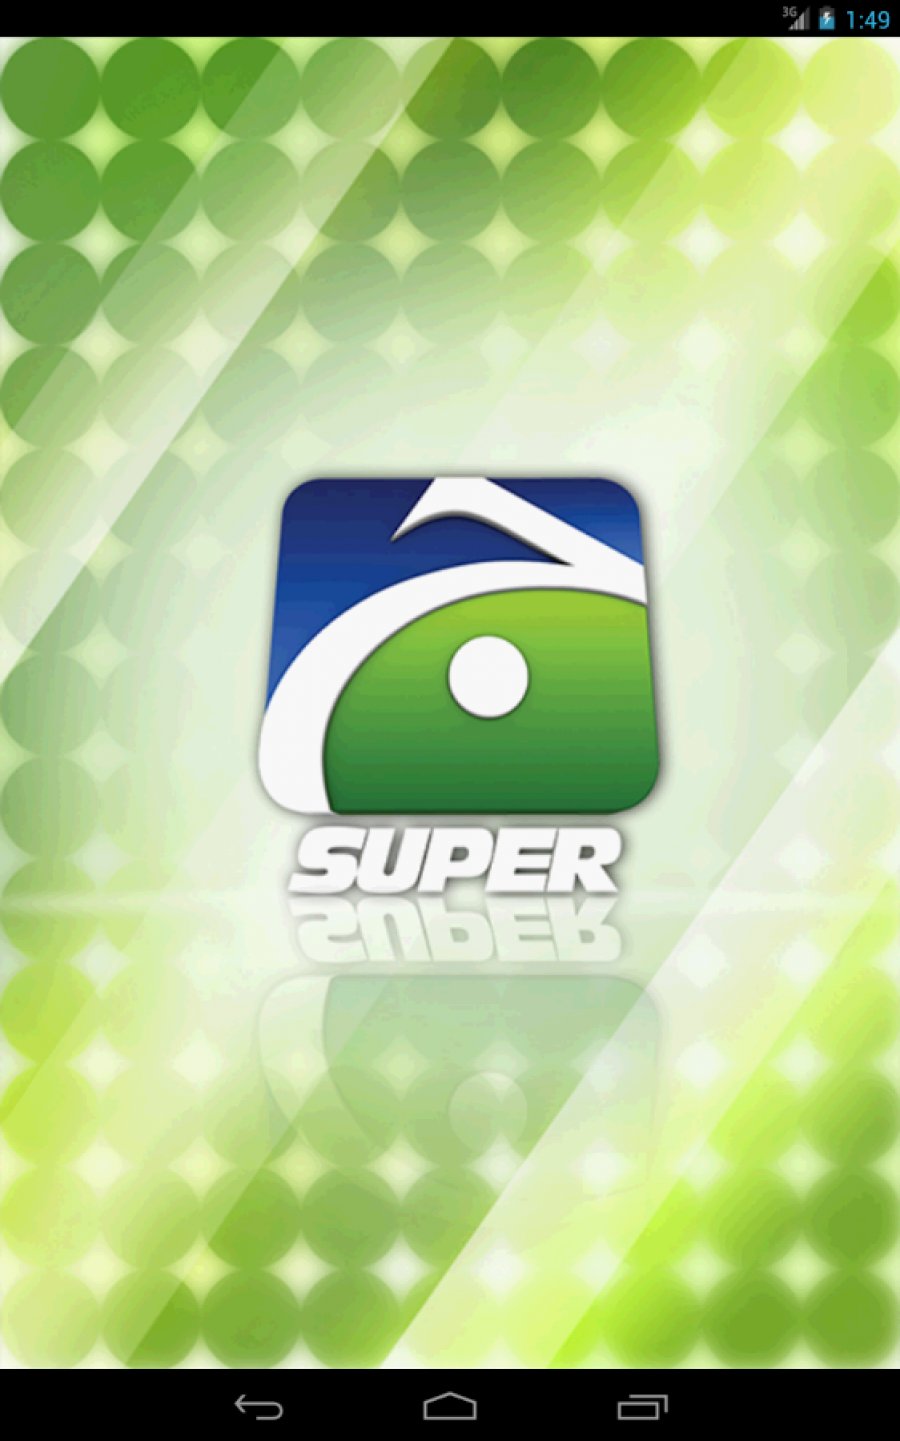 Geo Super Android Game APK (com.snr.geosuper) by SeenReport Inc.